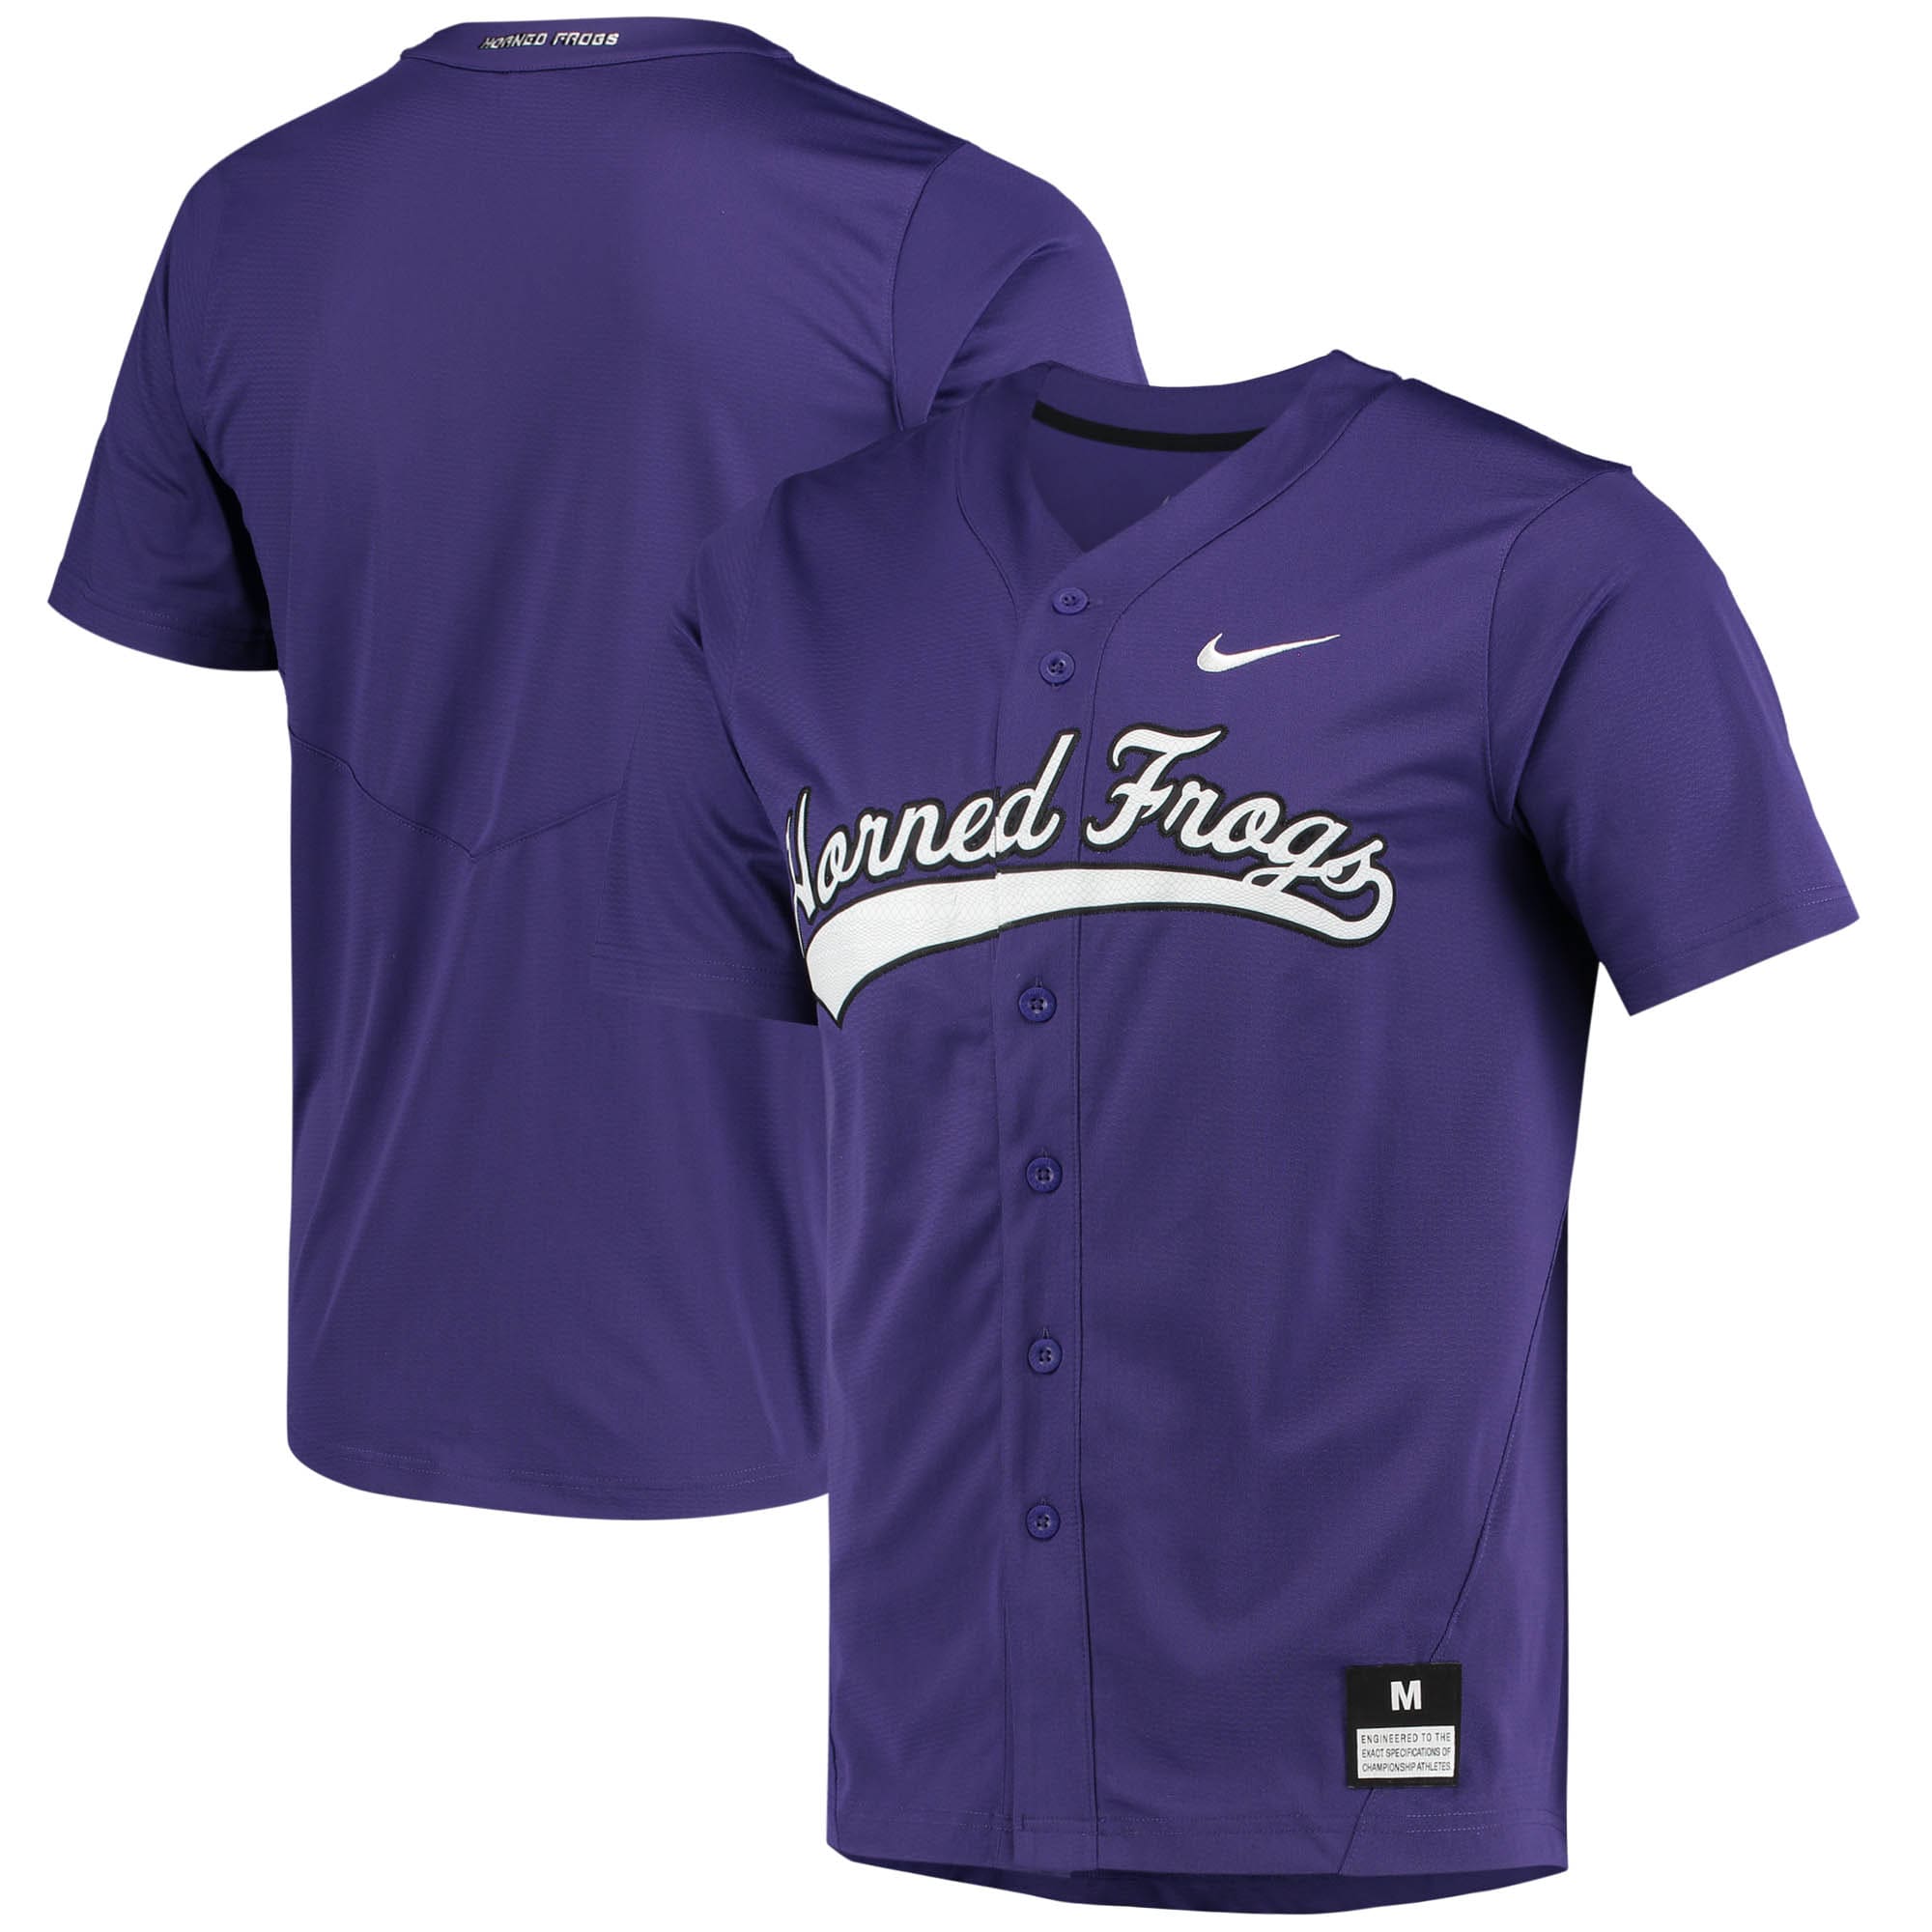 Tcu Horned Frogs Replica Full-Button Baseball Jersey - Purple For Youth Women Men